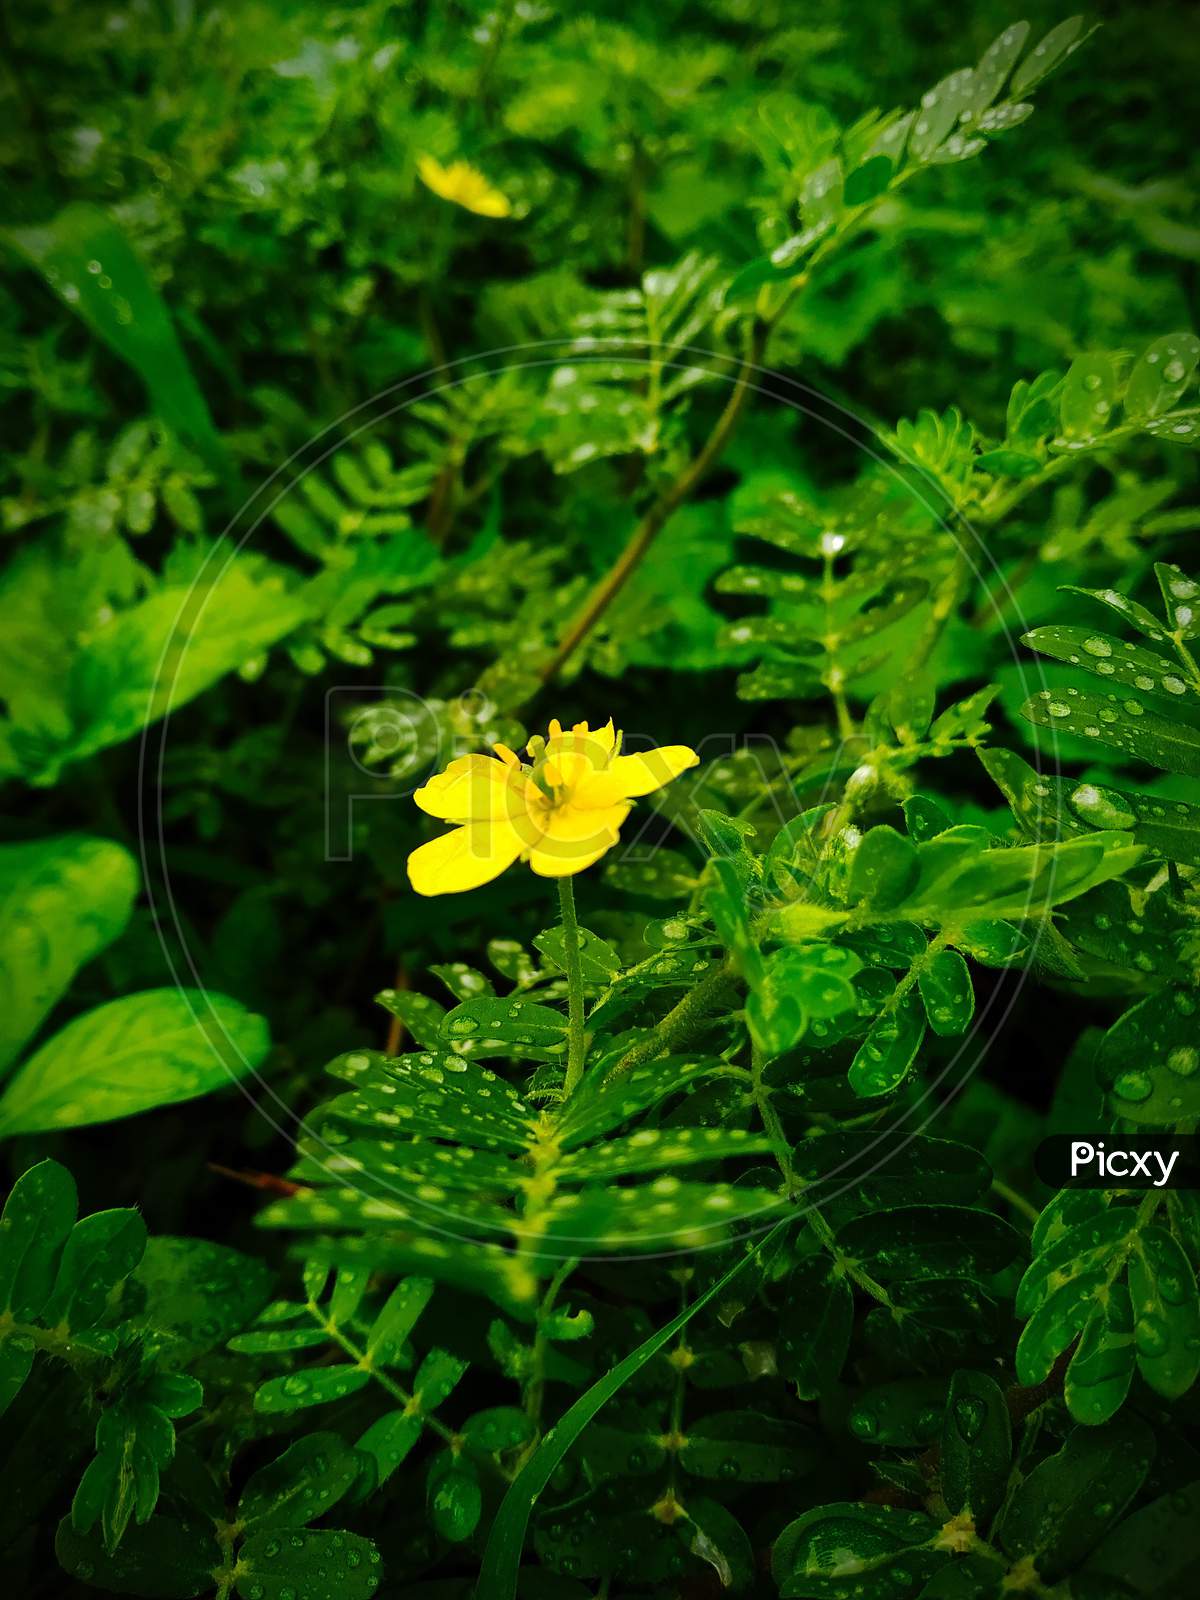 The beautiful yellow flower